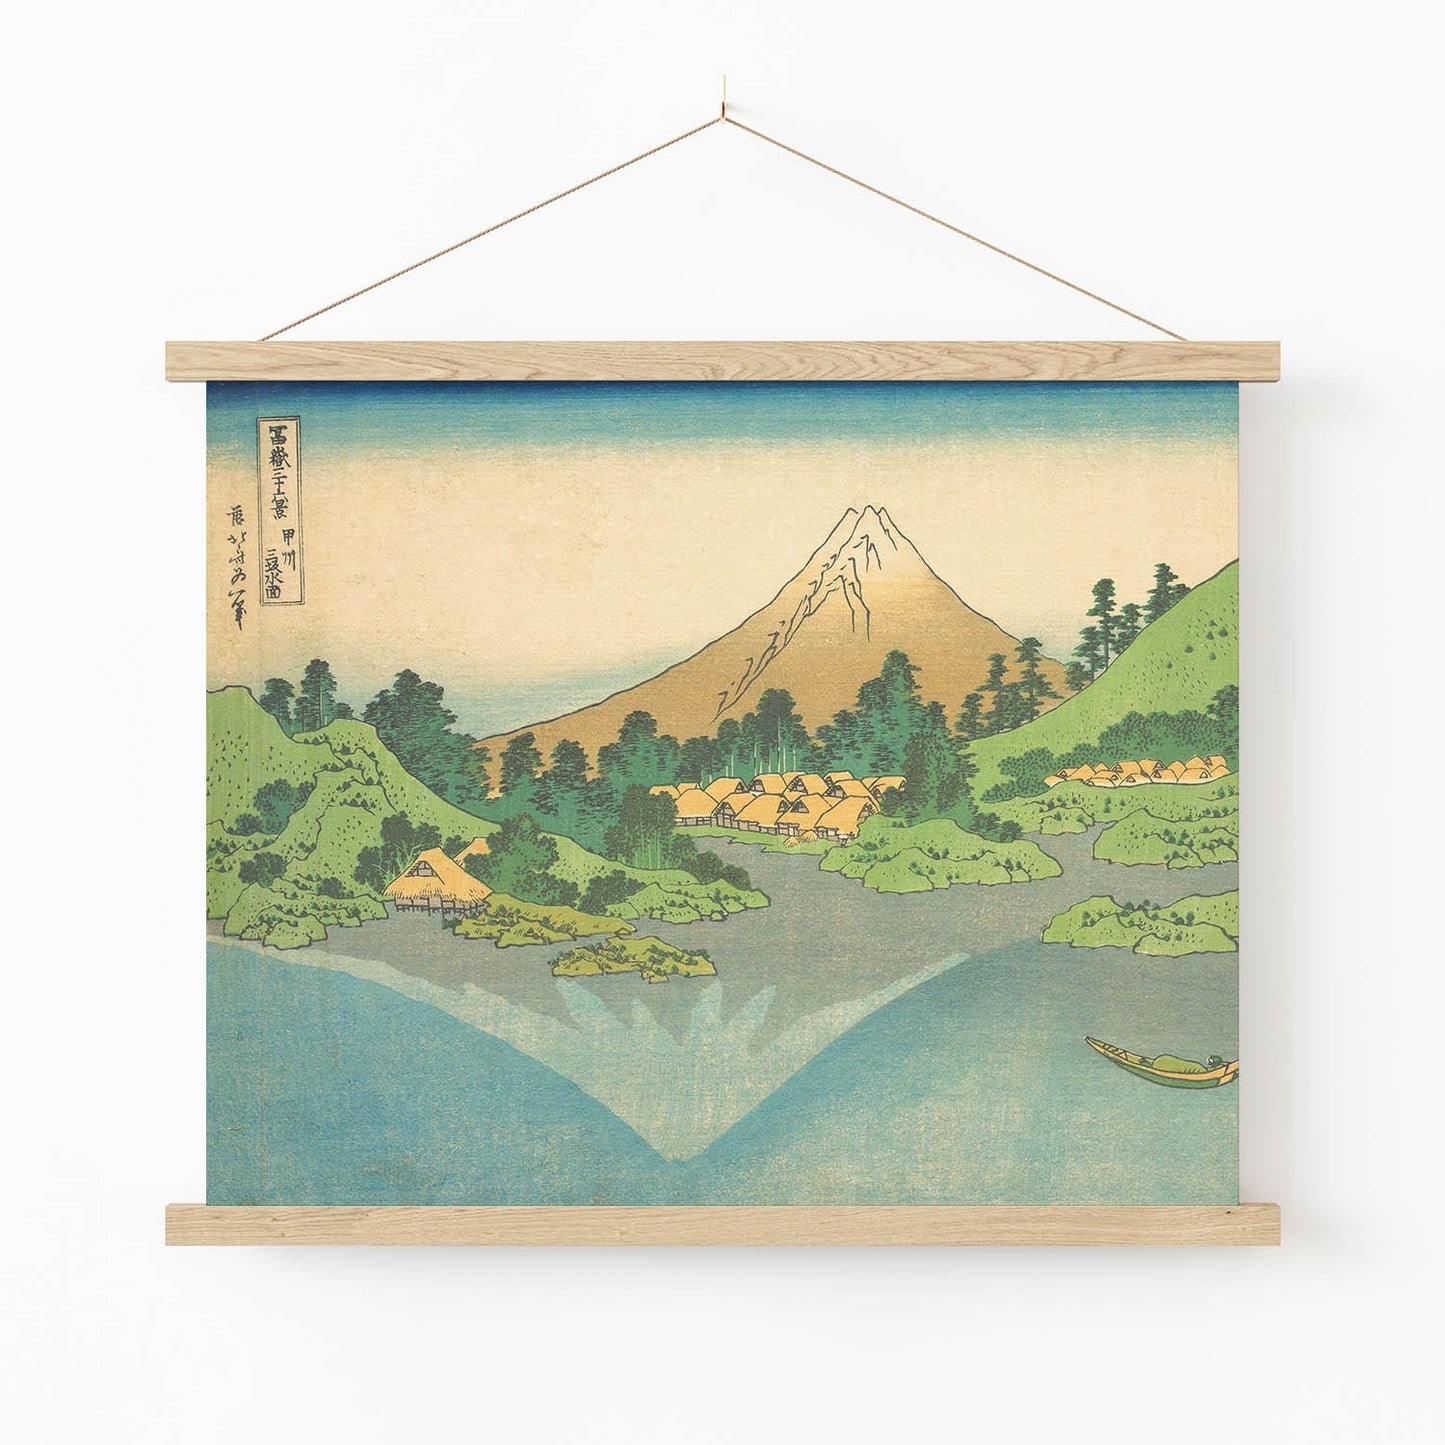 Mount Fuji Reflection Art Print in Wood Hanger Frame on Wall